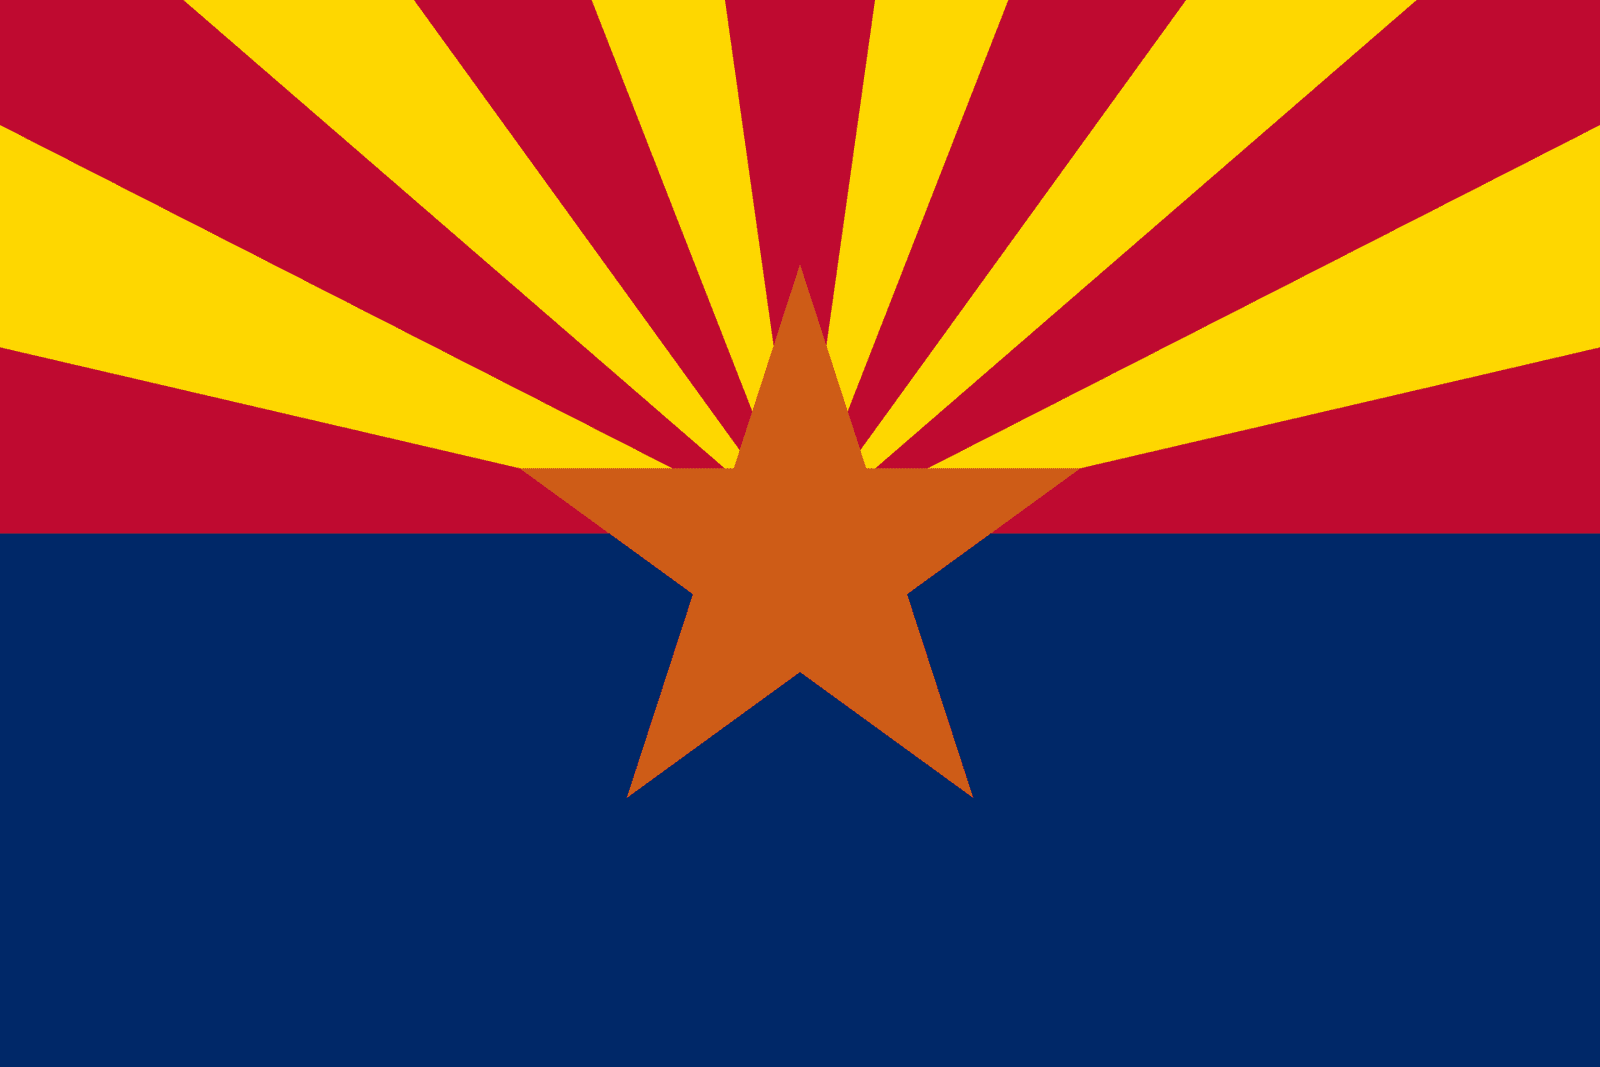 Thumbnail for "Raising Arizona's Profile in the 2020 Conversation".